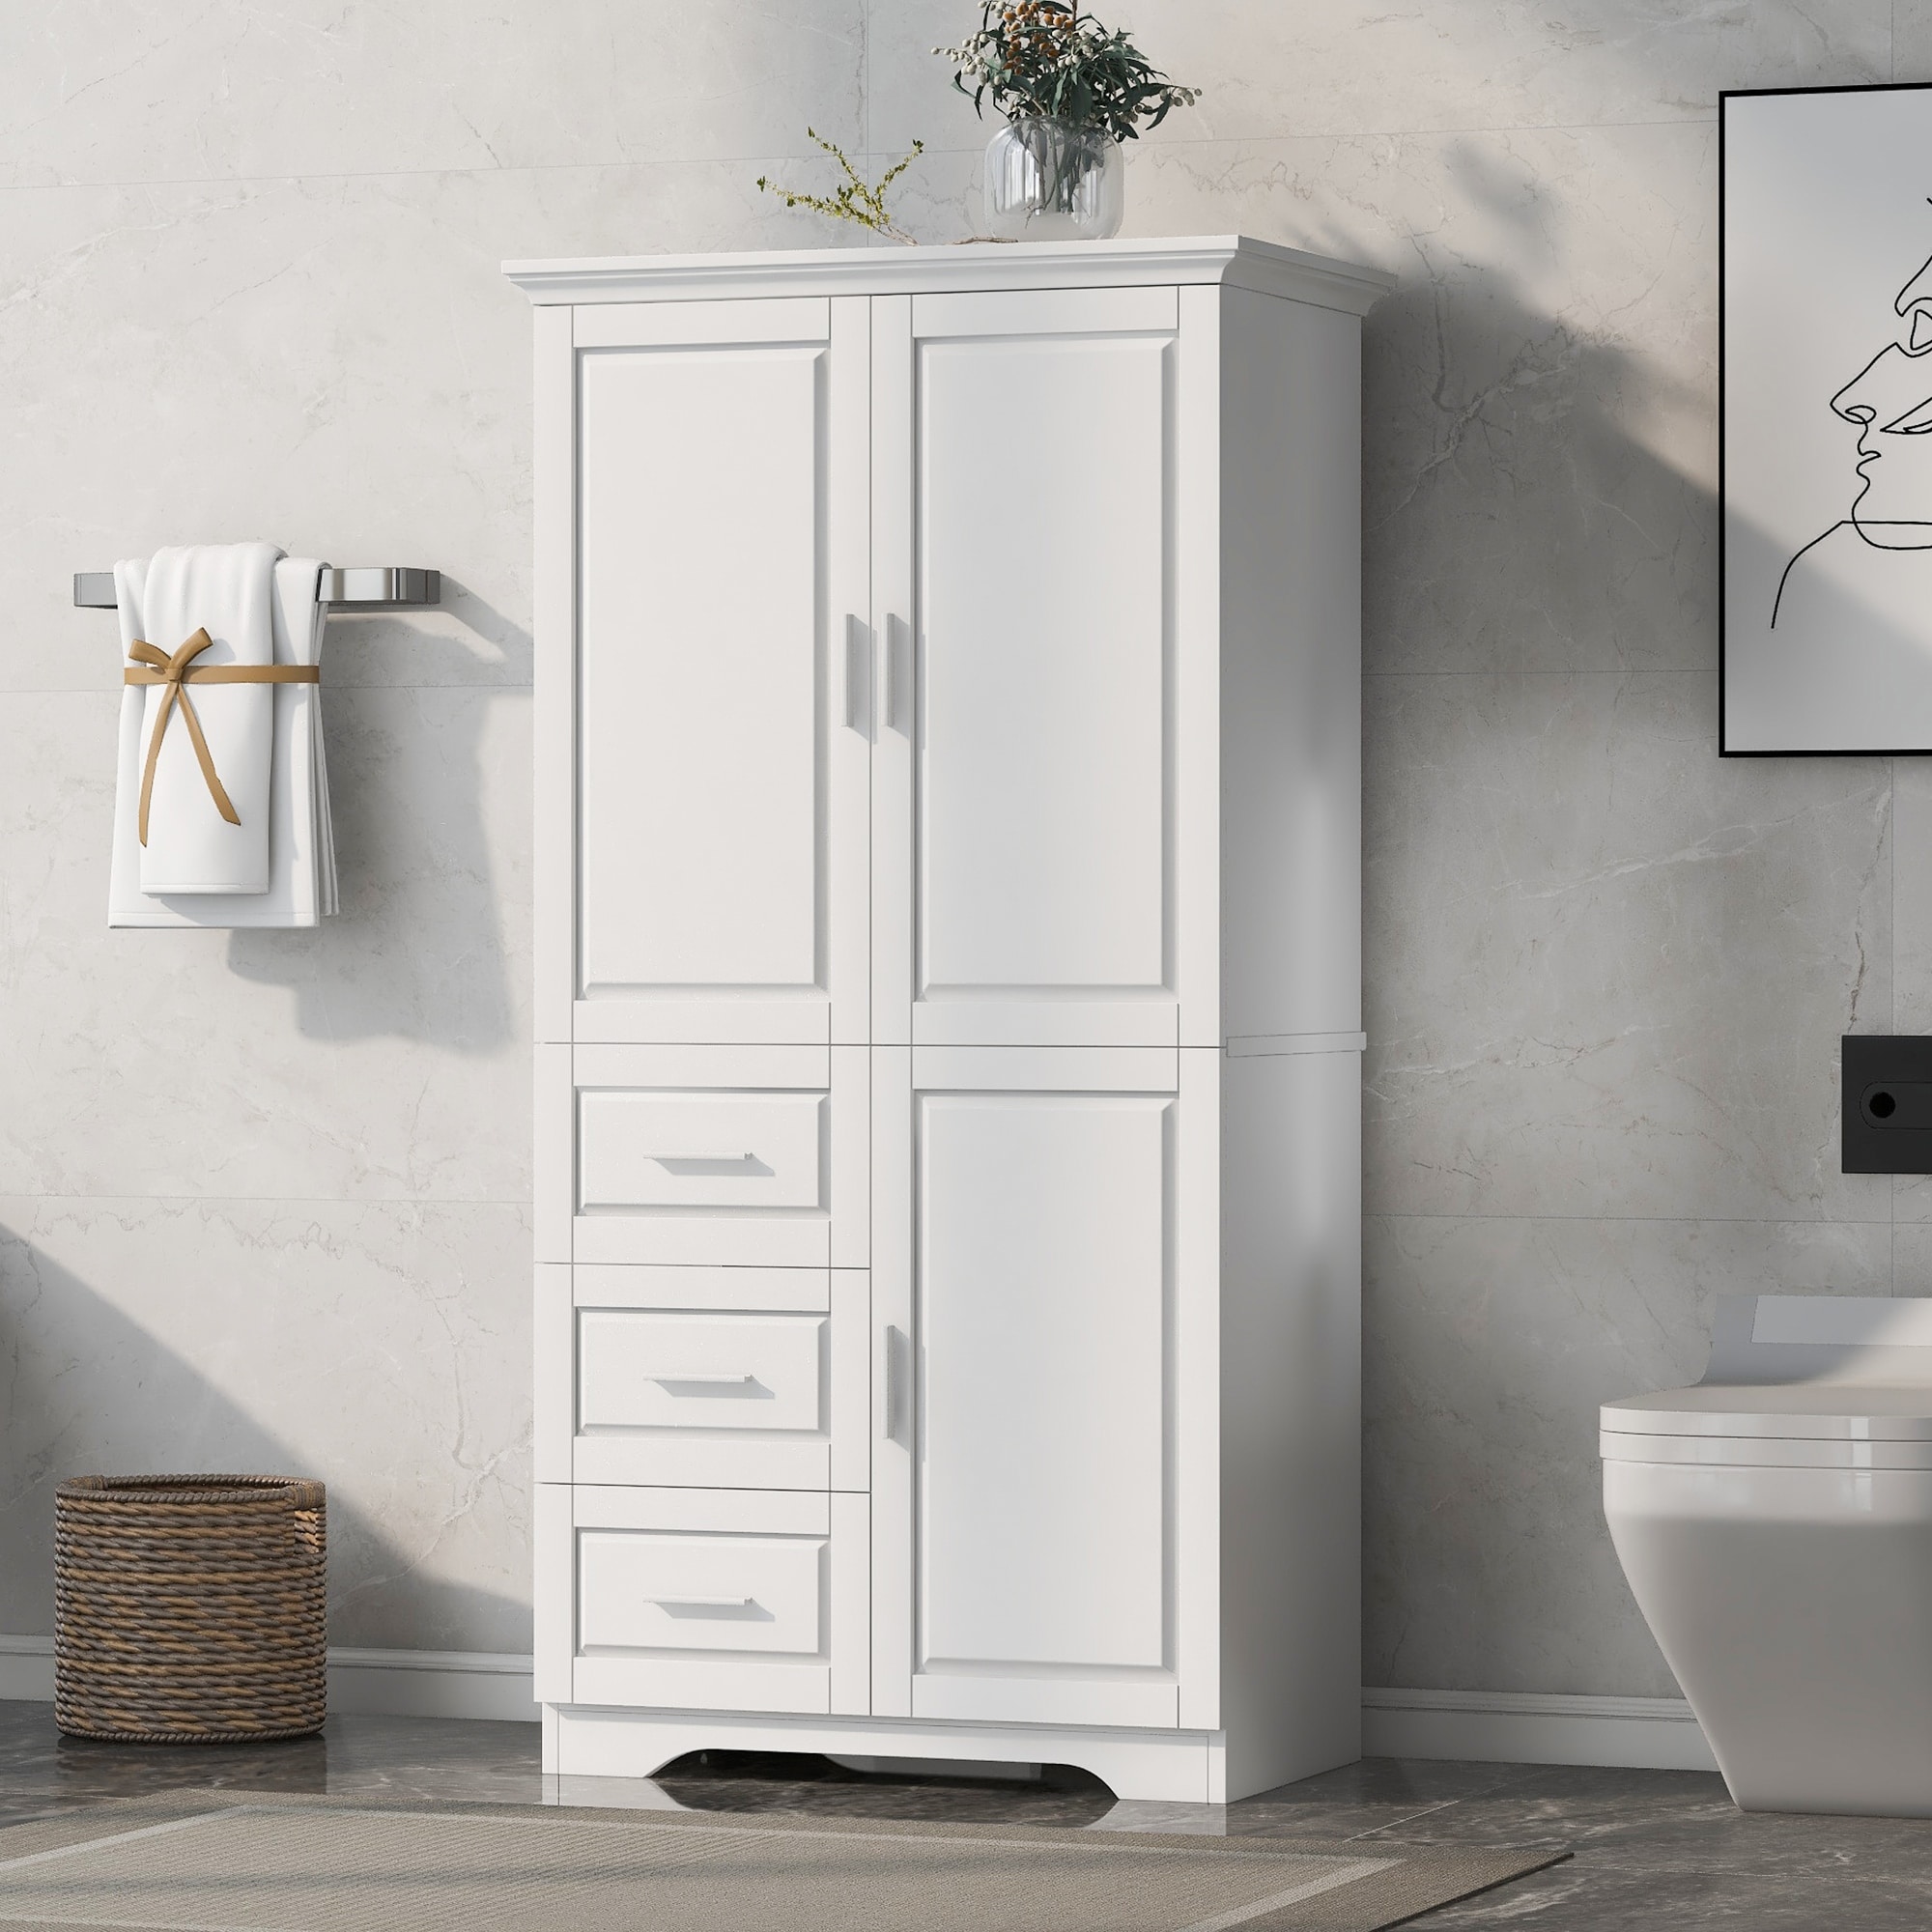 White Linen Tower Closet Bathroom Towel Storage Cabinet Tall Slim Organizer  Unit